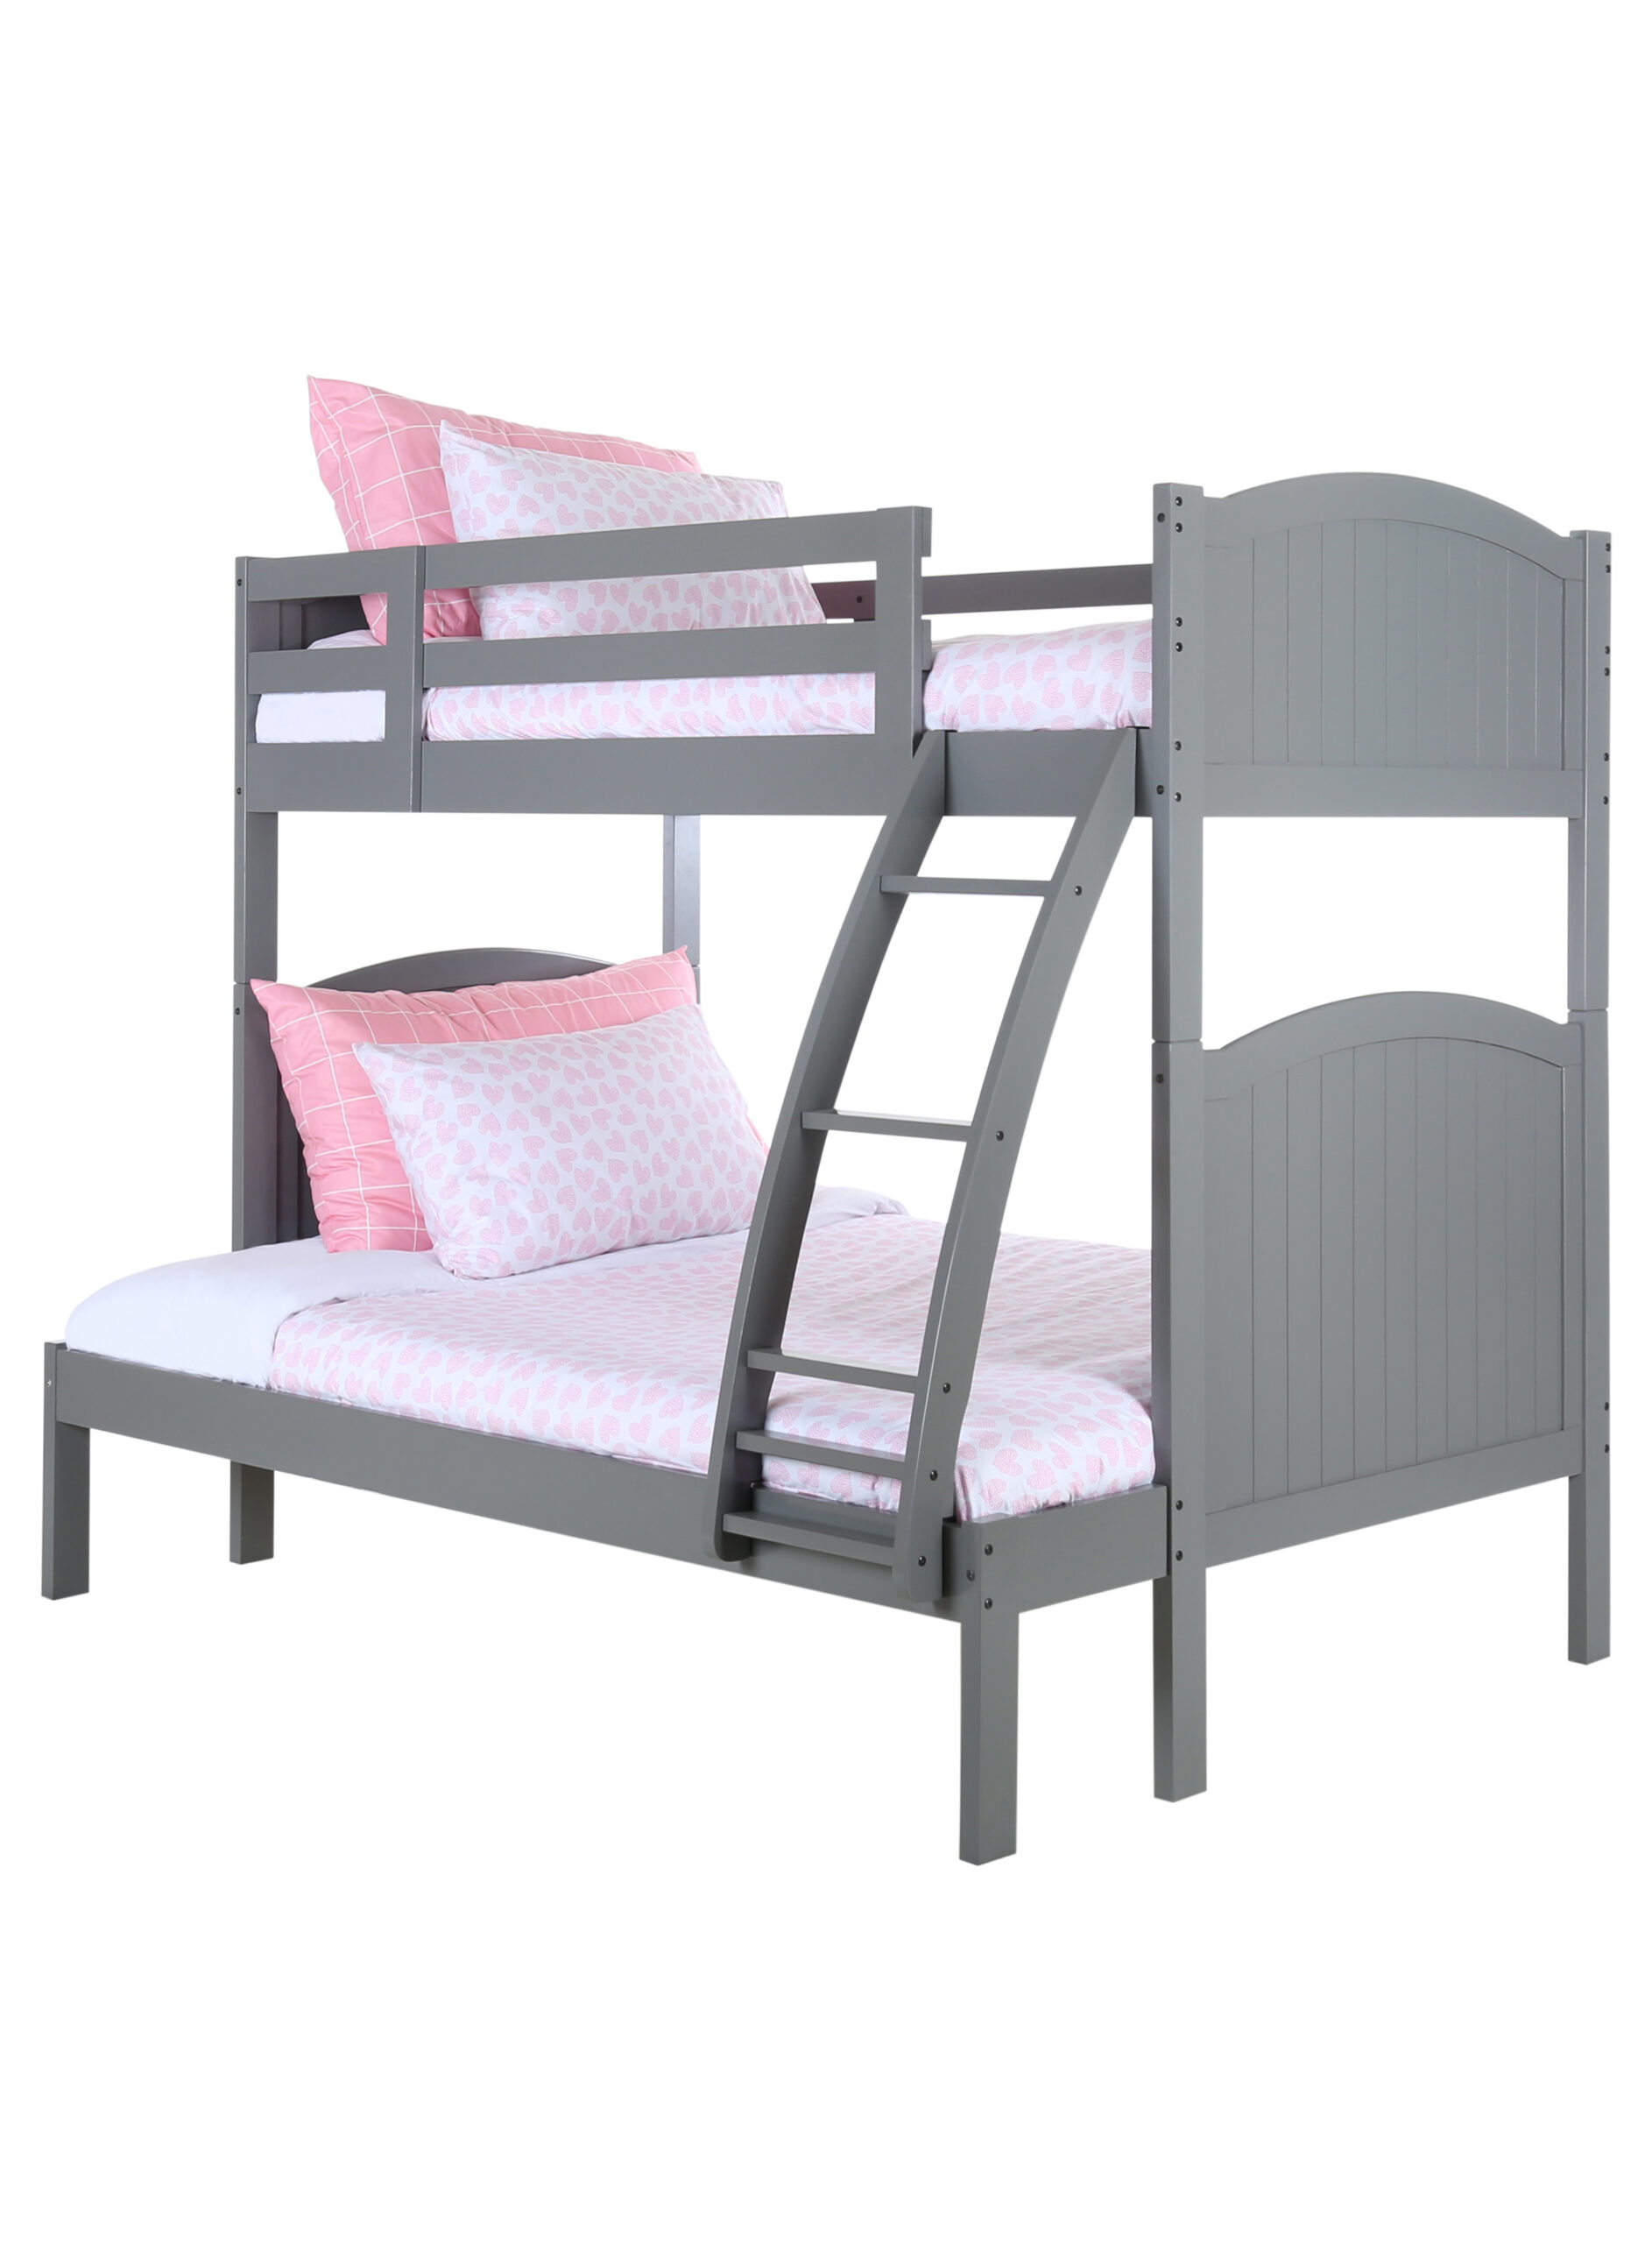 Paris Twin Over Full Konrad Furniture, Storkcraft Pink Bunk Bed